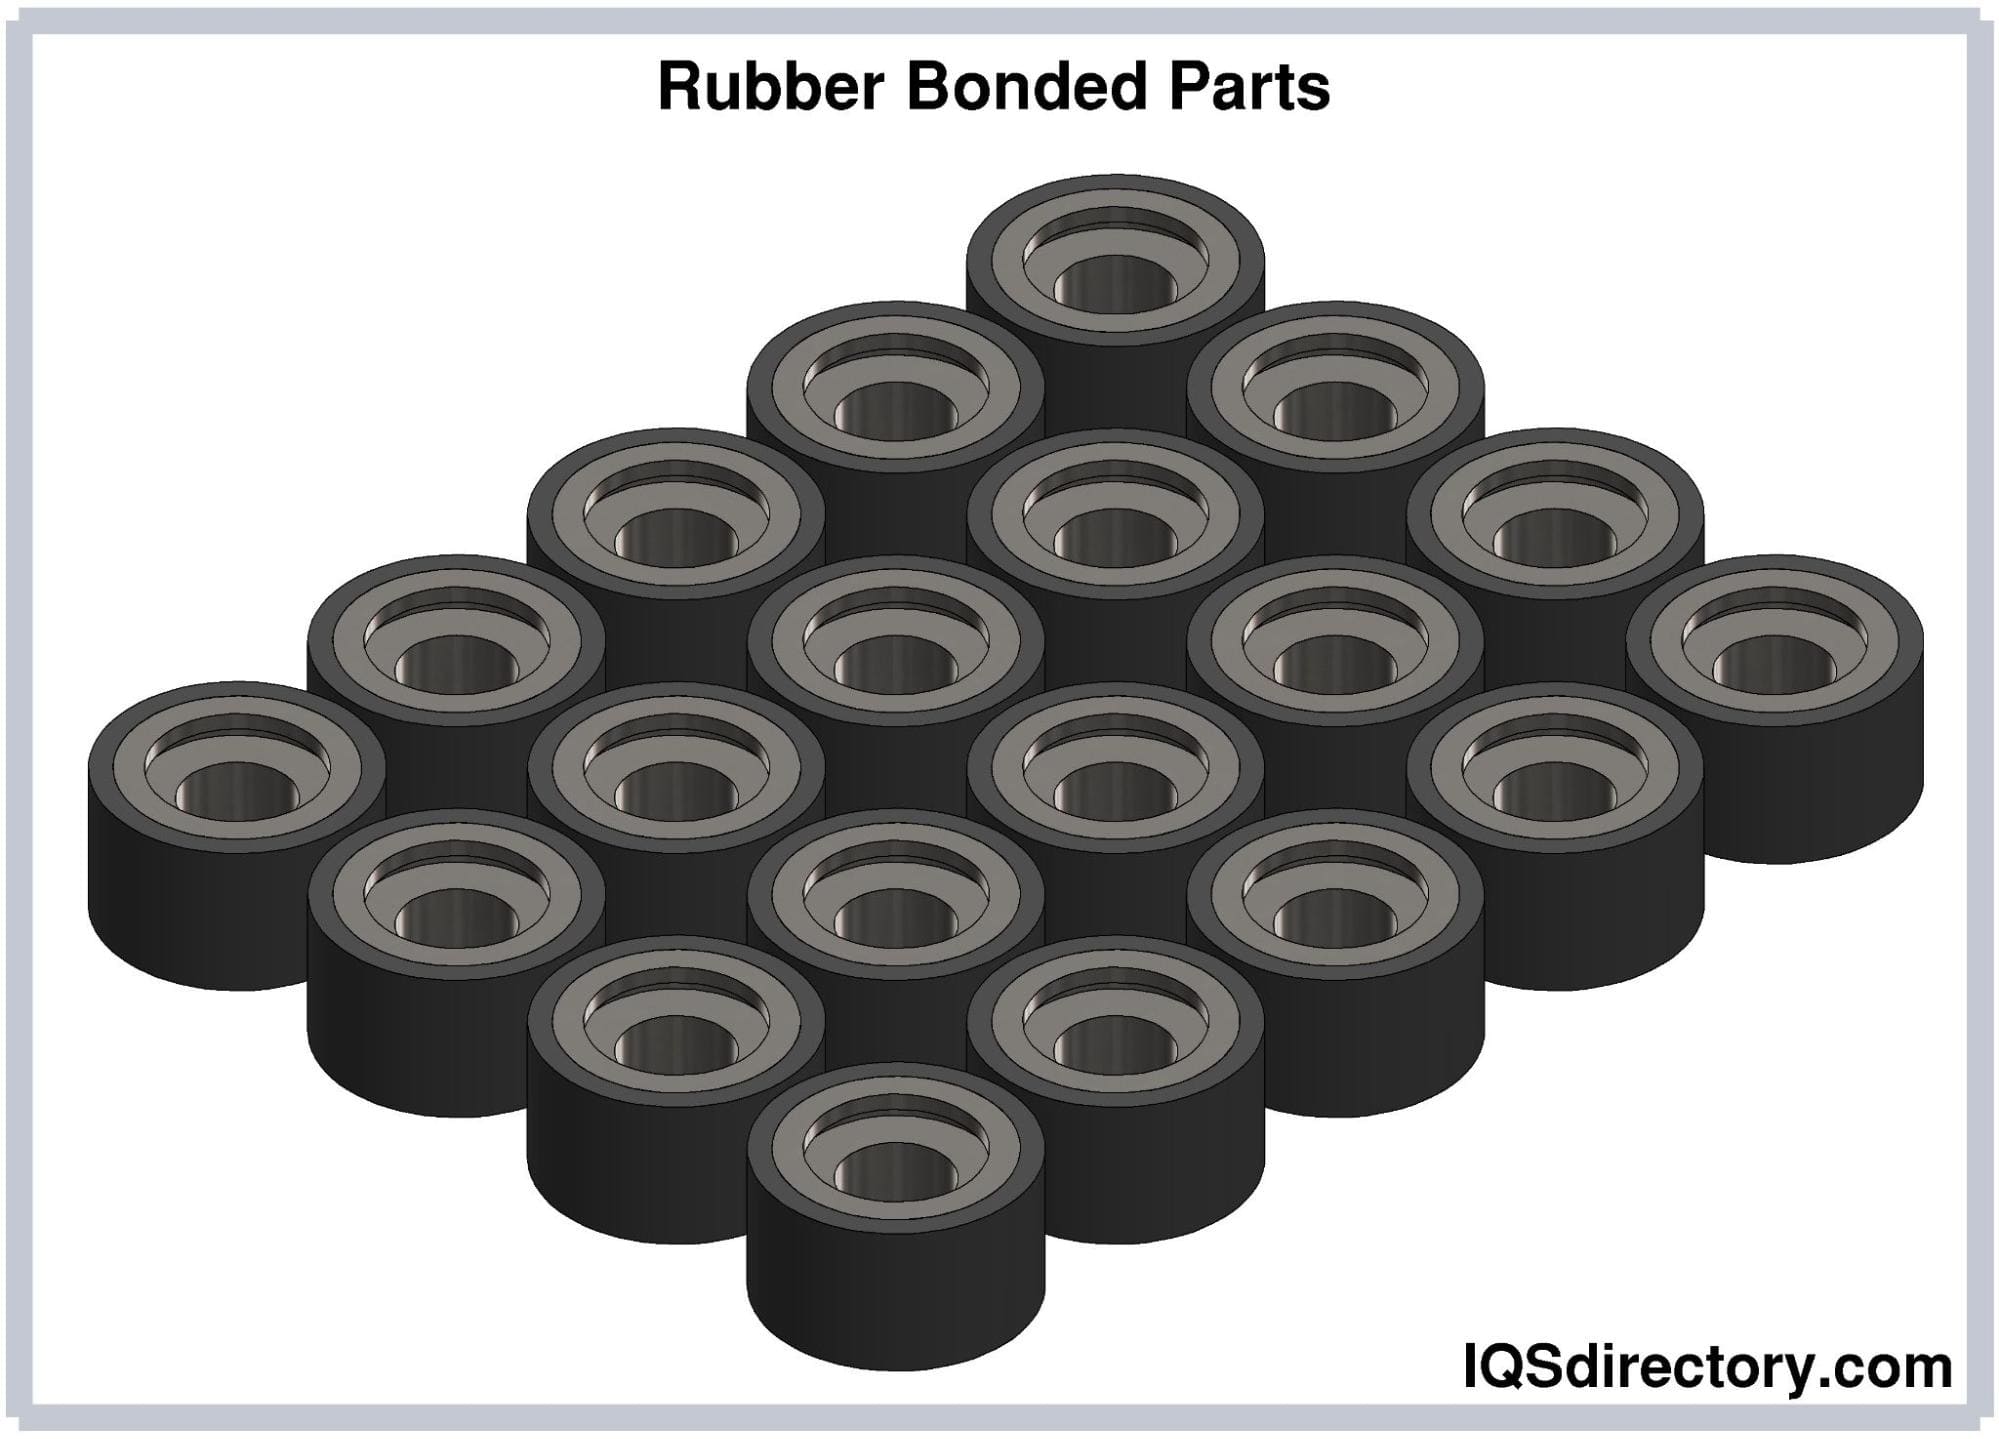 Rubber Bonded Parts